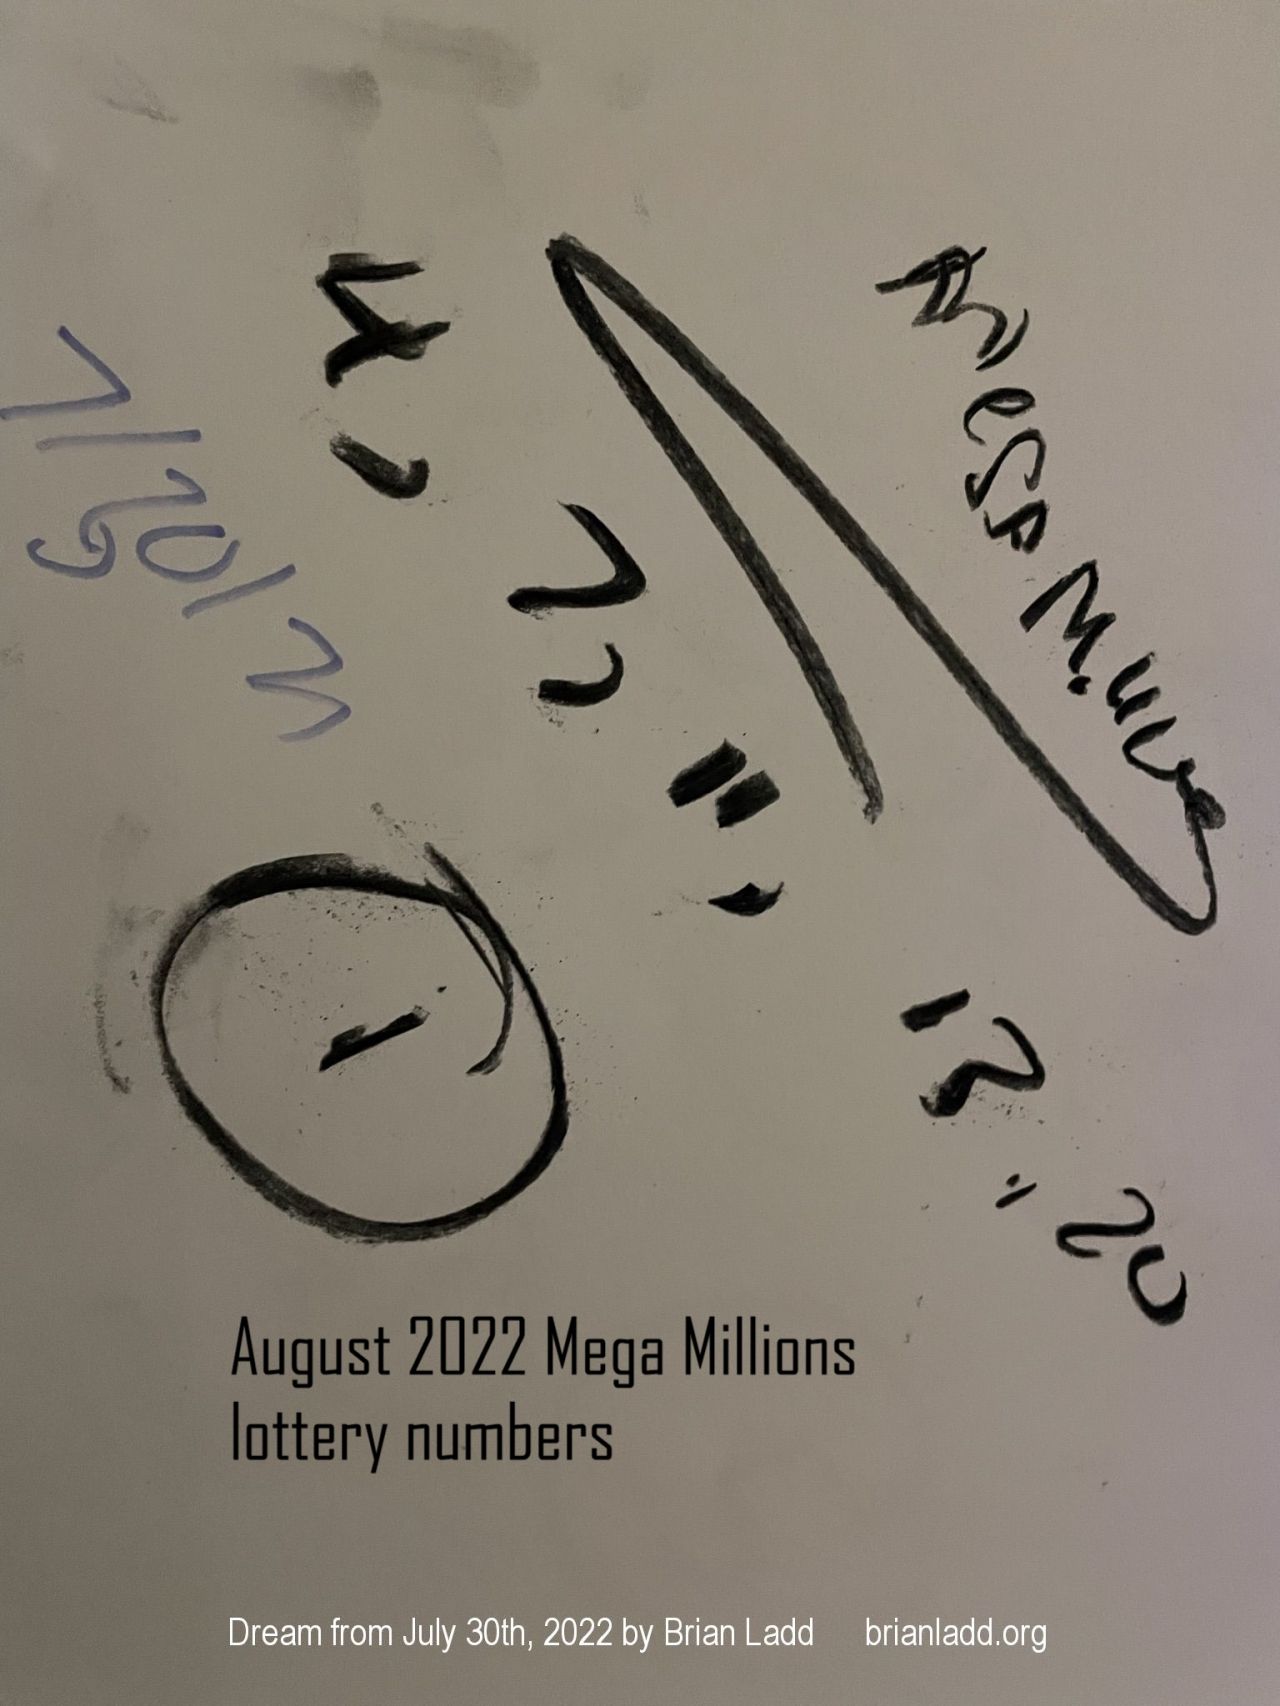 30 July 2022 2  August 2022 Mega Millions lottery numbers...
August 2022 Mega Millions lottery numbers.
